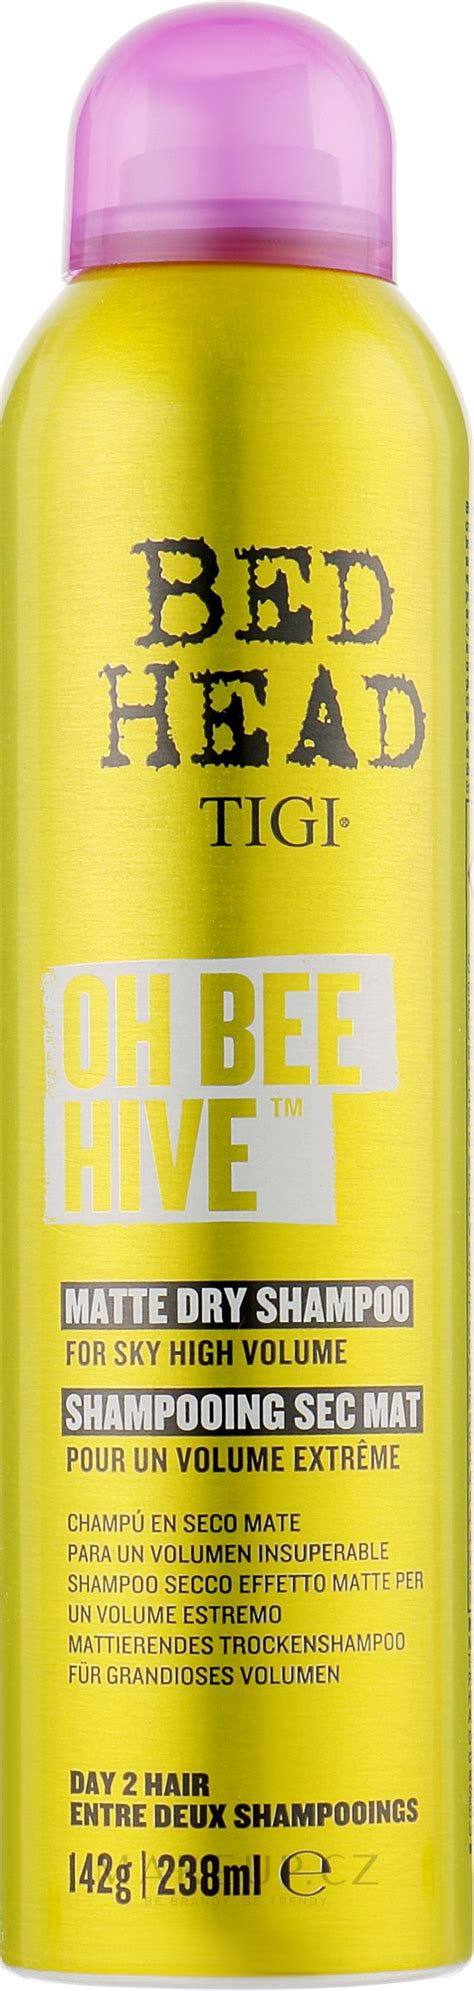 Tigi Bed Head Oh Bee Hive Matte Dry Shampoo Such Ampon Makeup Cz